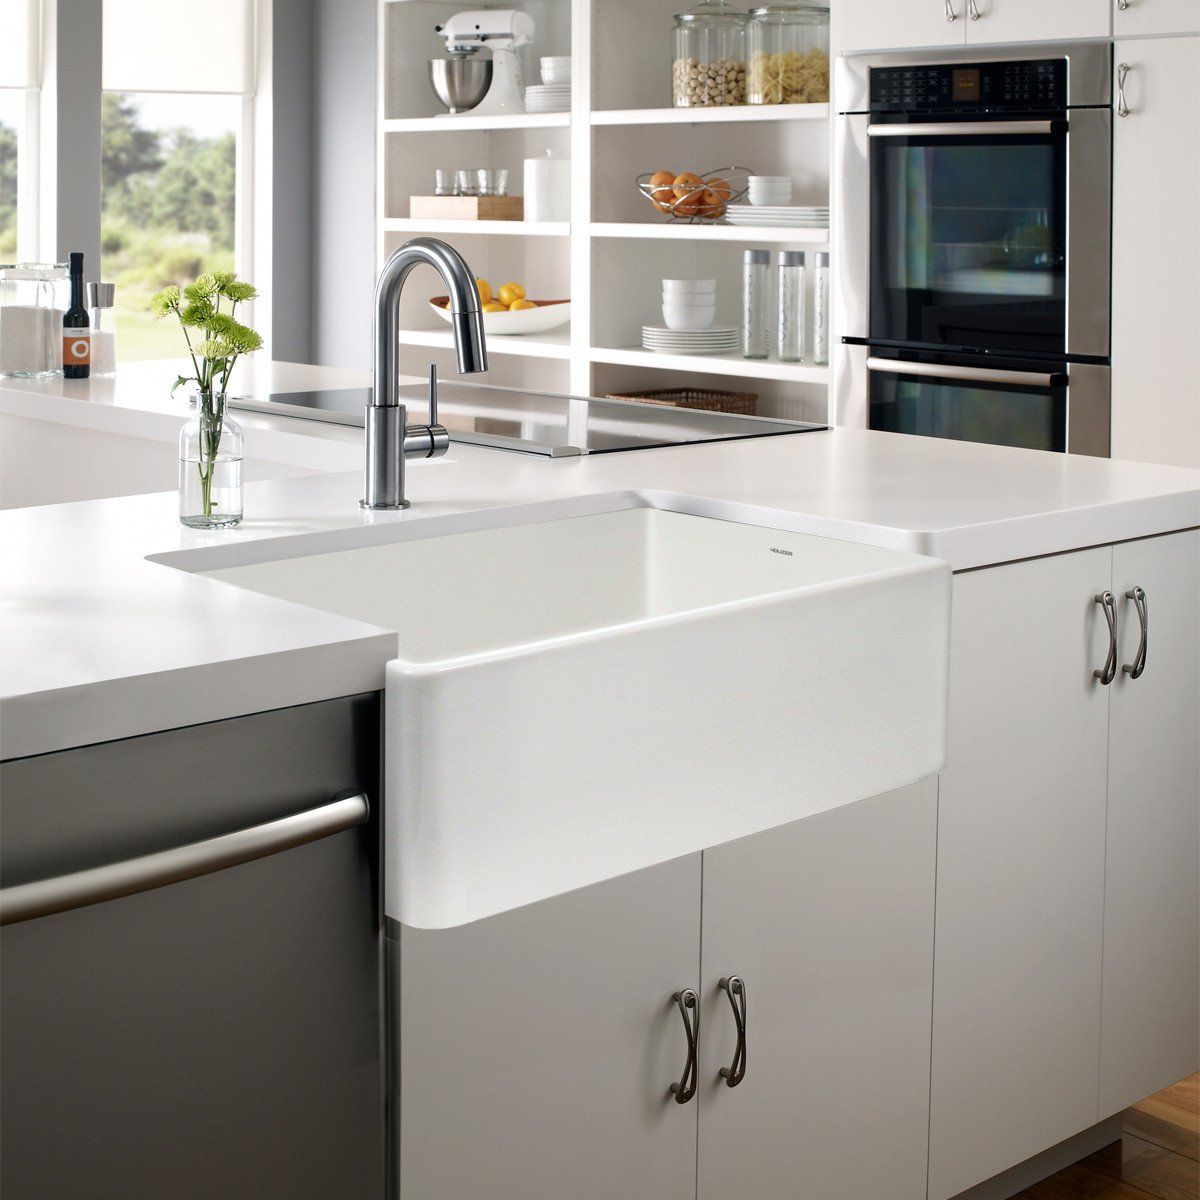 Houzer WH Platus Series 33-Inch Apron-Front Fireclay Single Bowl Kitchen Sink, White Kitchen Sink - Apron Front Houzer 